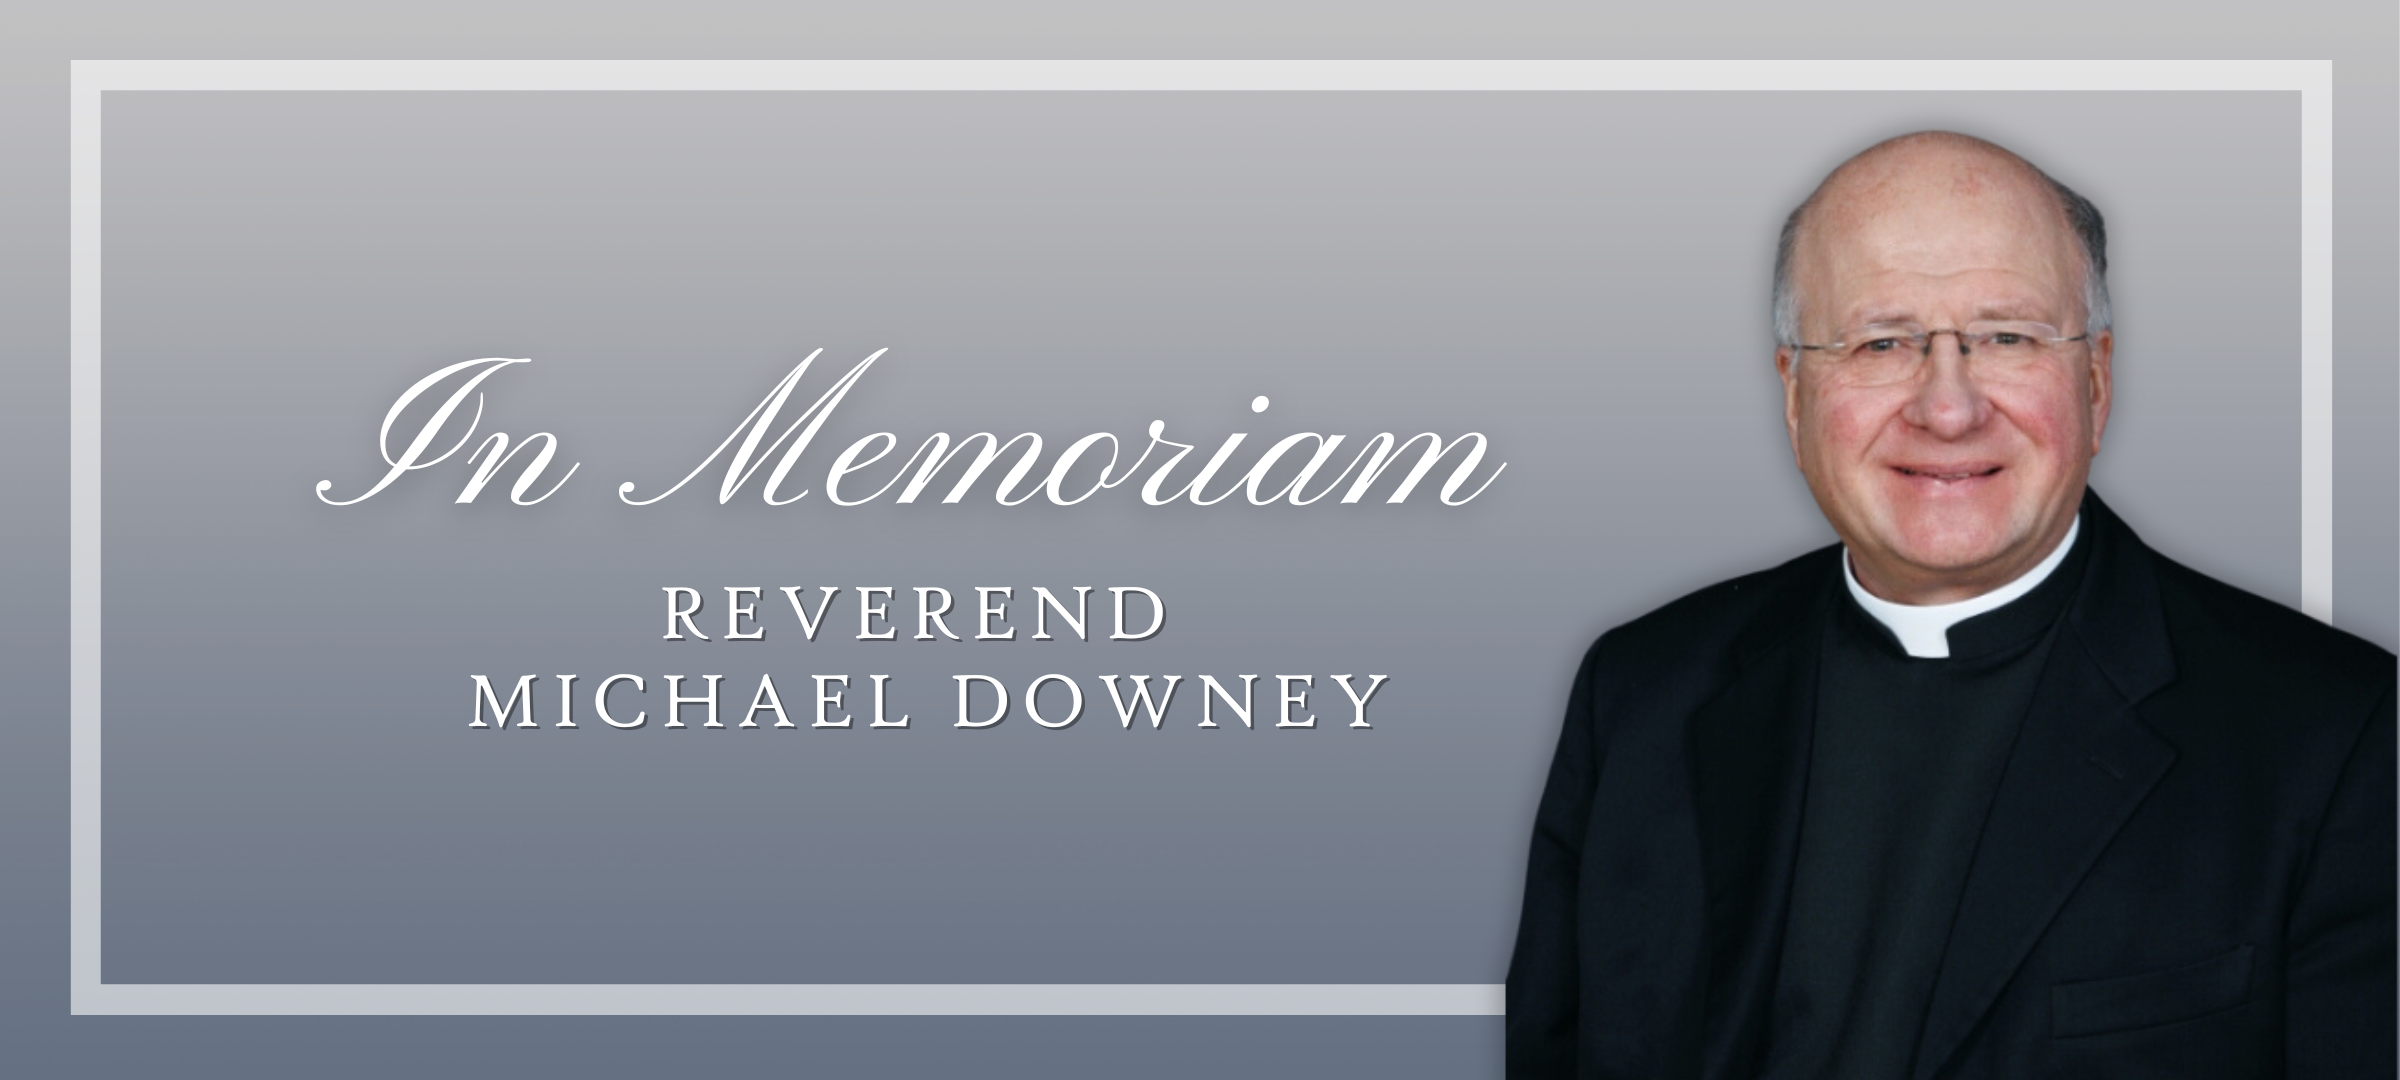 In Memoriam: Reverend Michael Downey